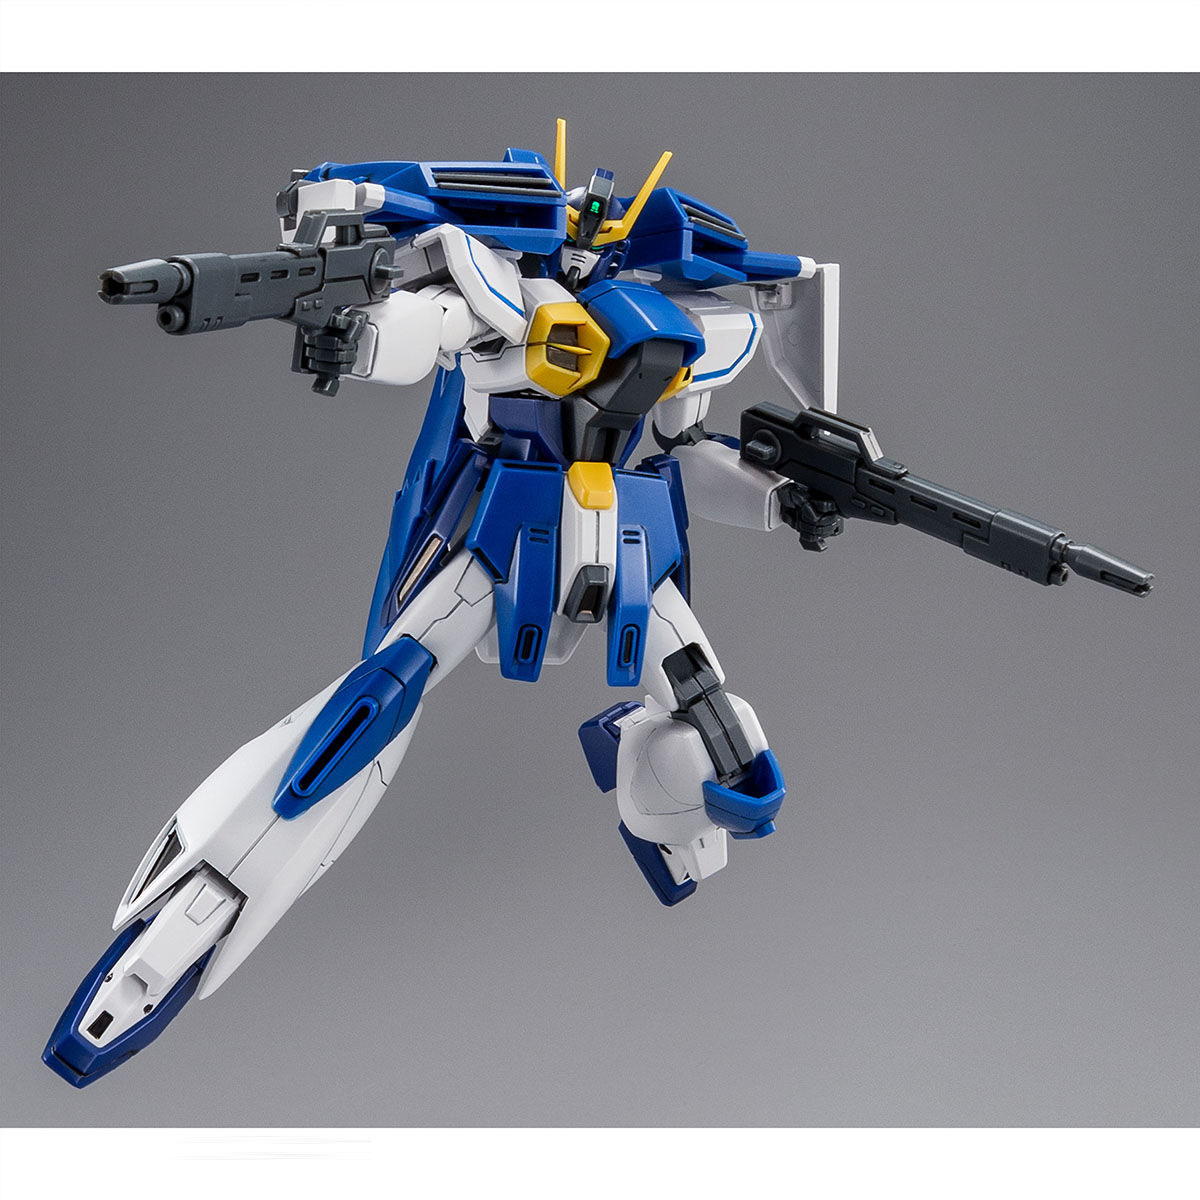 Bandai HGUC HGAW 184 HG 1/144 Gw-9800 Gundam Air Master AirMaster Model Kit for sale online 